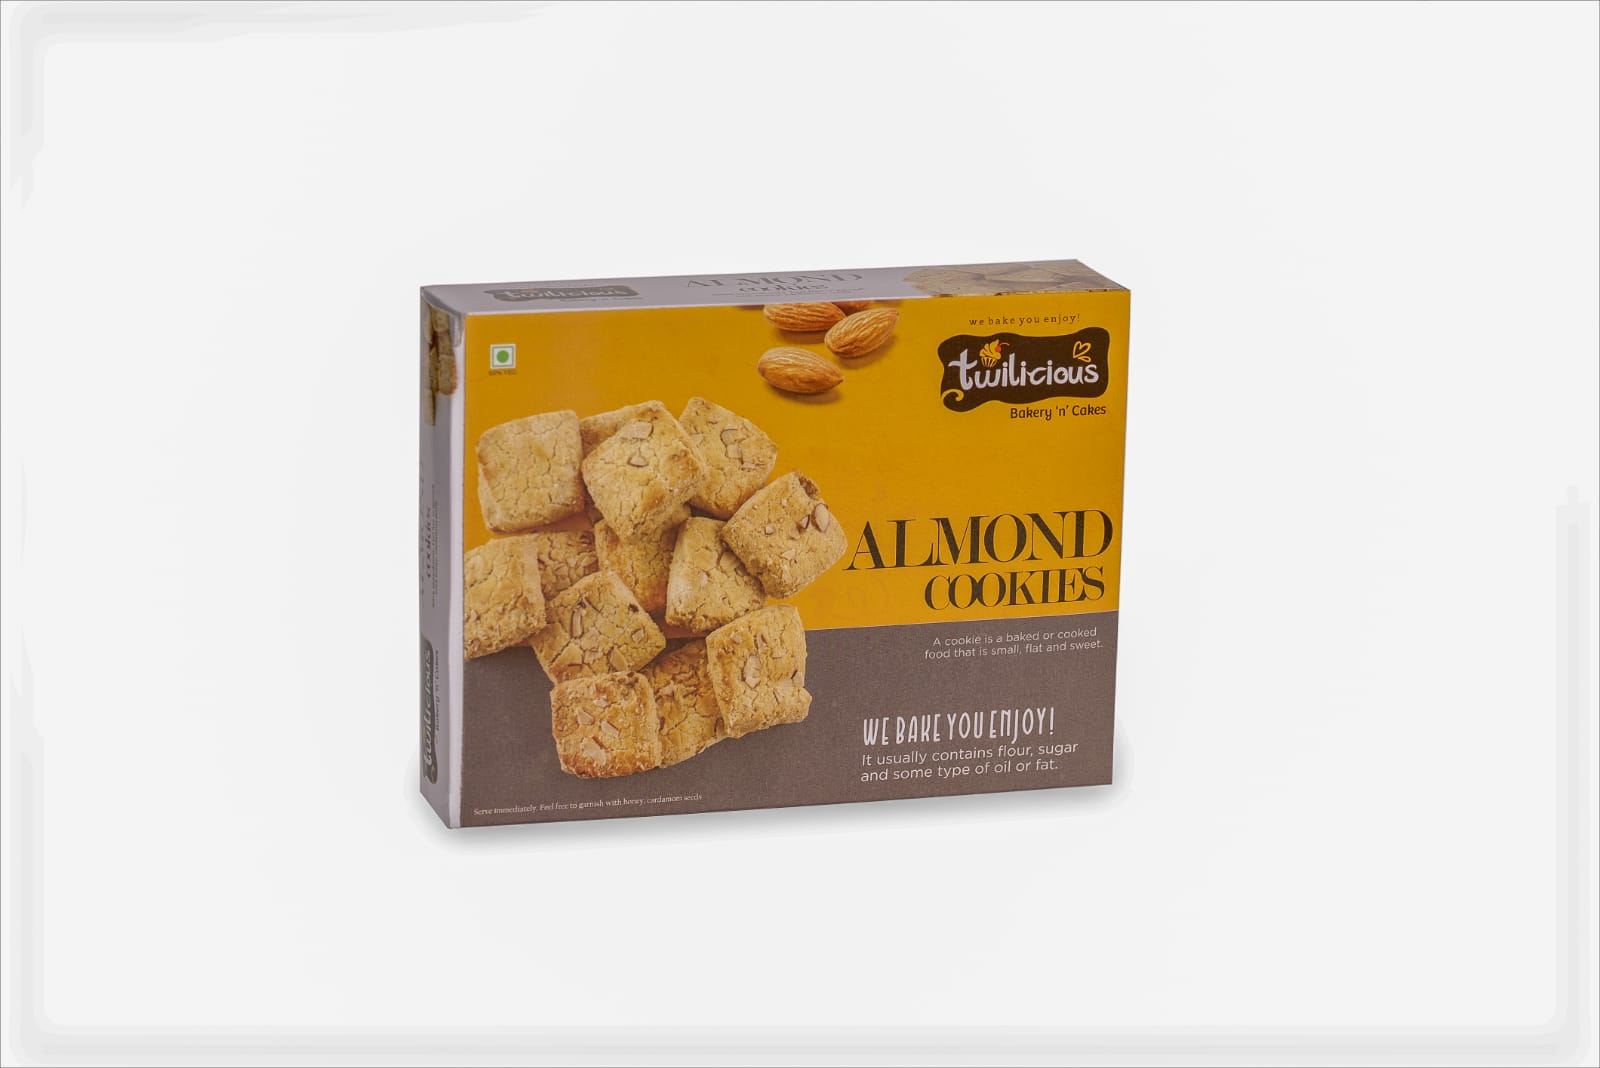 Twilicious Almond Cookies